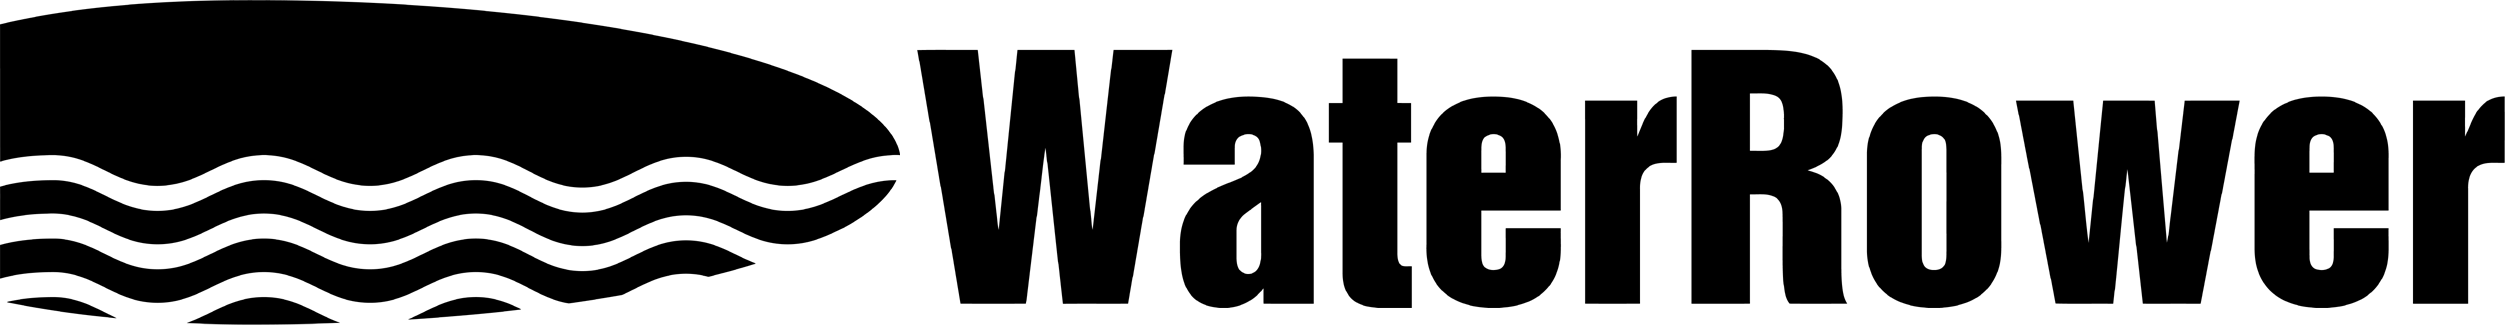 WaterRower-Logo-Description-Black(1).png